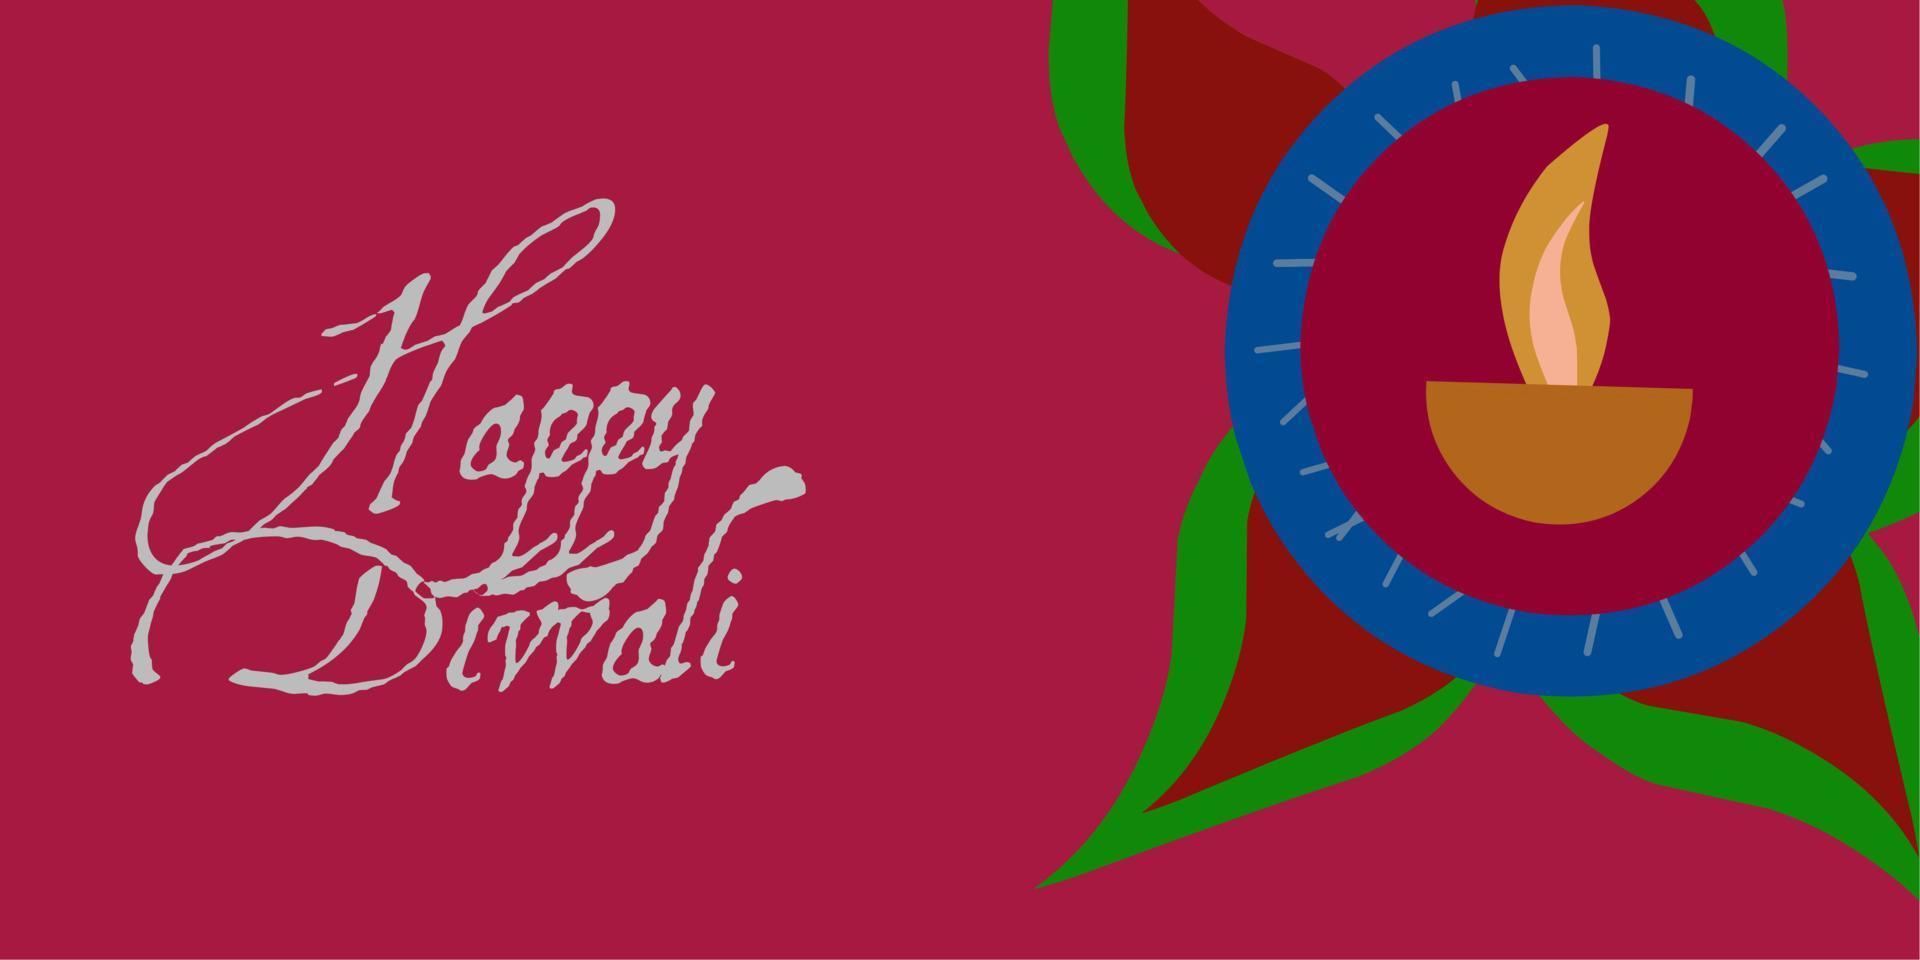 ilustração vetorial de banner de pôster de diwali feliz vetor